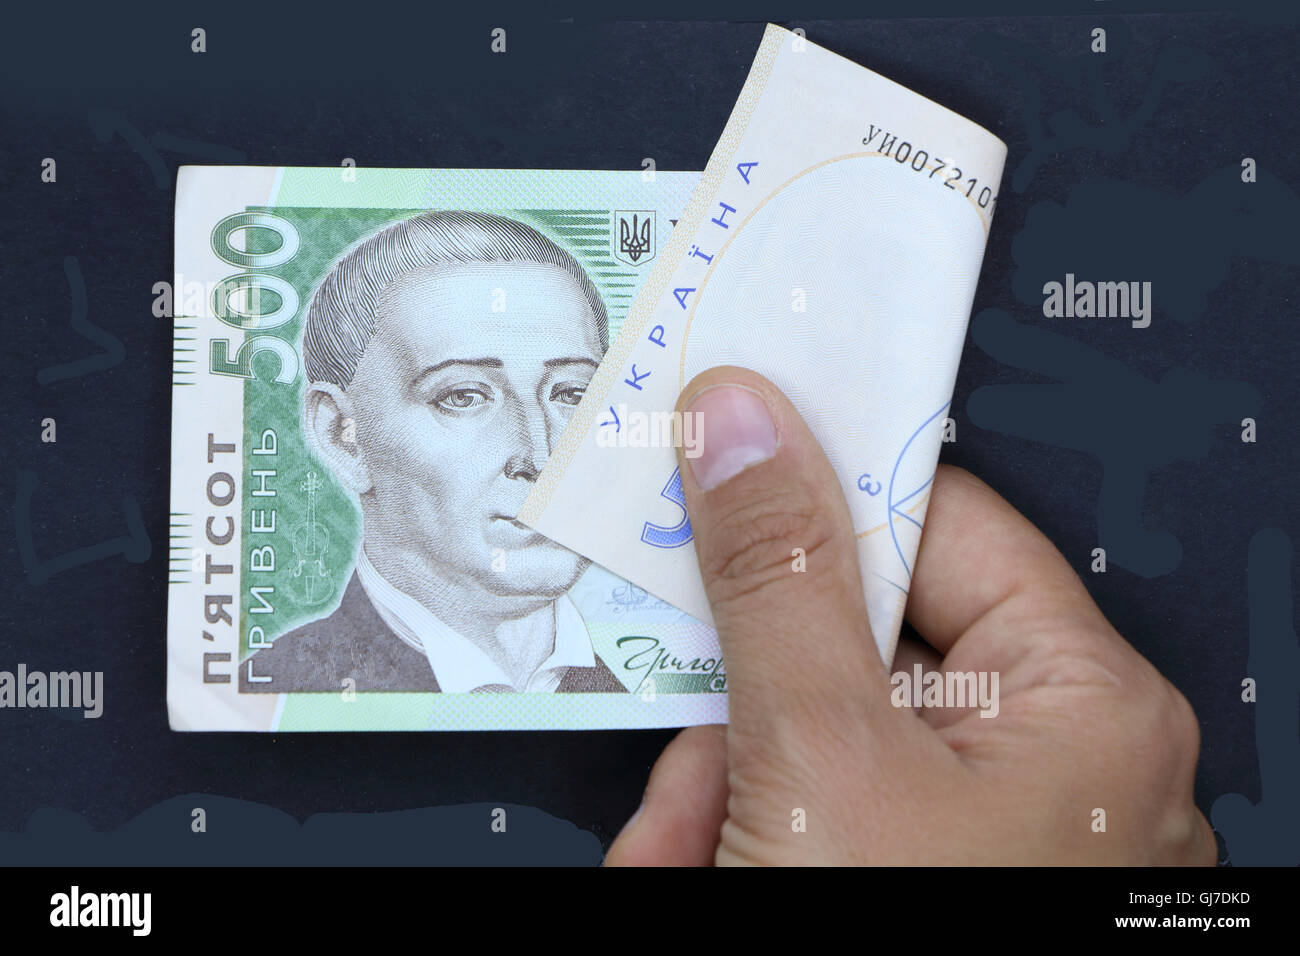 ukrainian money, hand with money, black background, holding money, five hundred hryvnia, ukrainian currency, financial situation Stock Photo